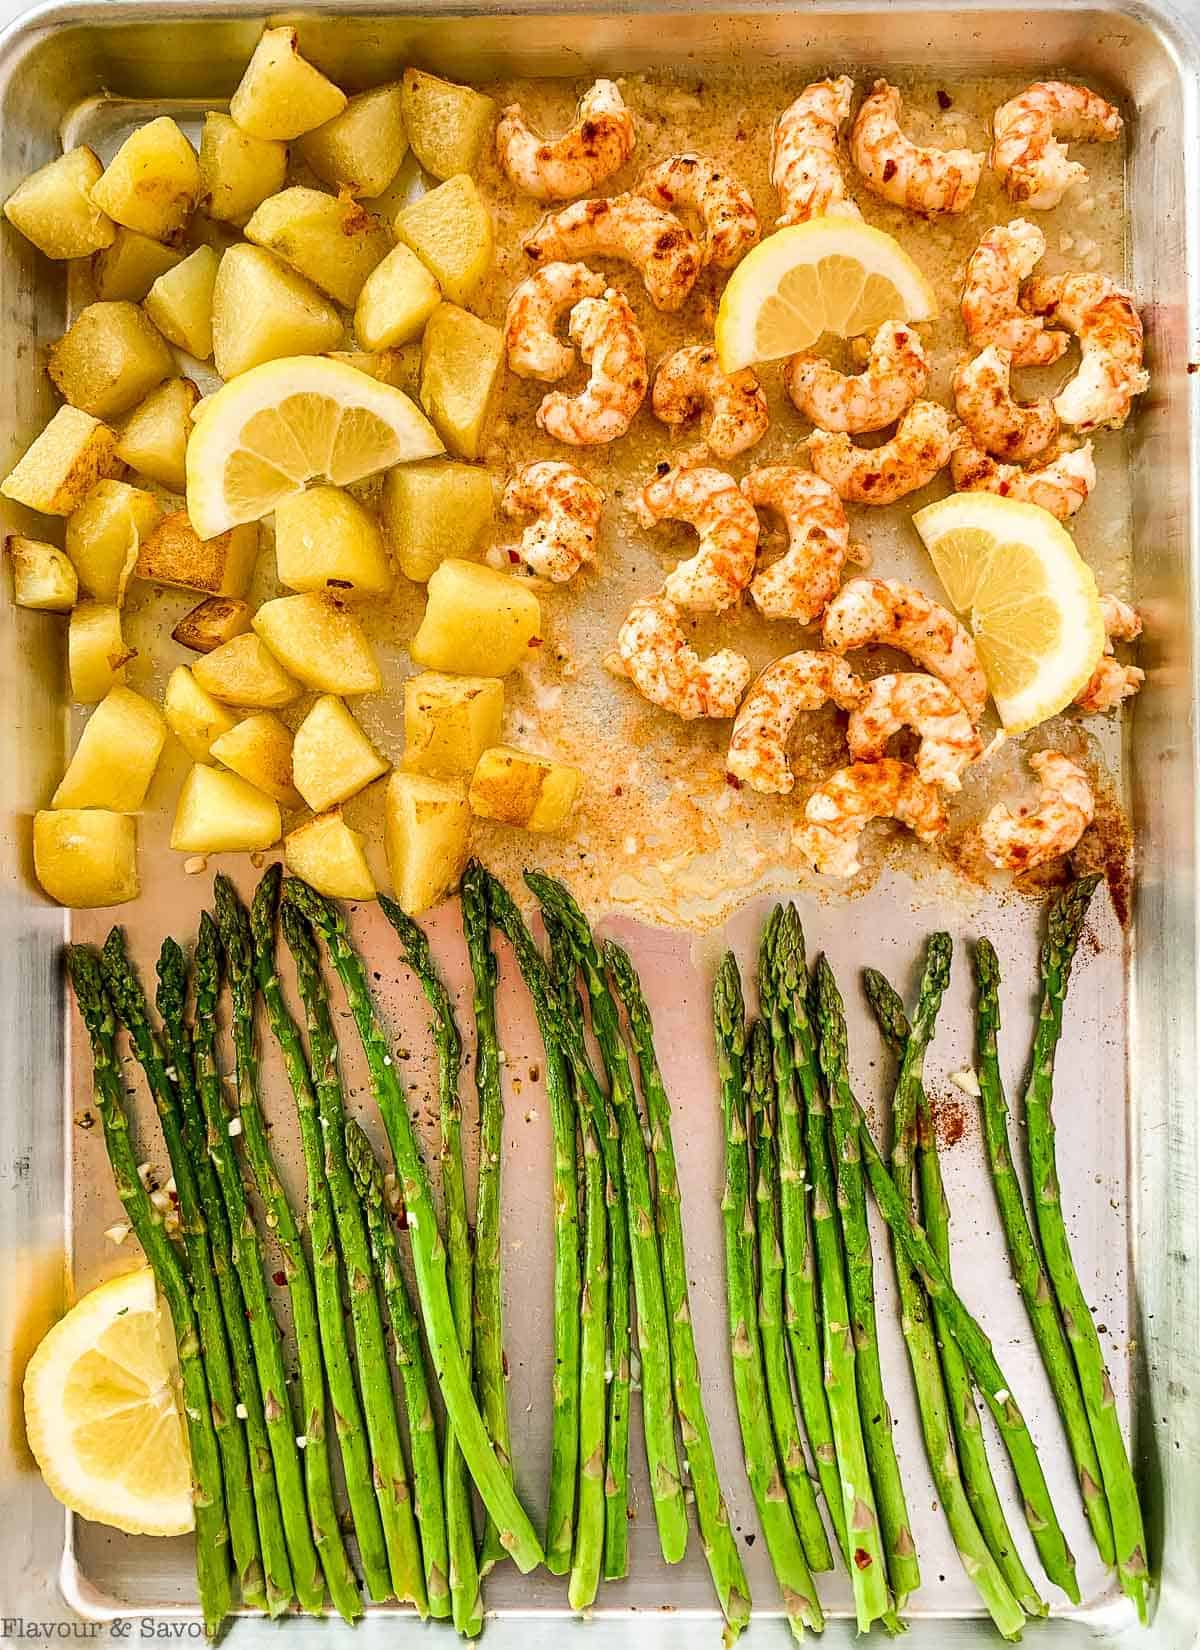 Potatoes, prawns and asparagus on a sheet pan